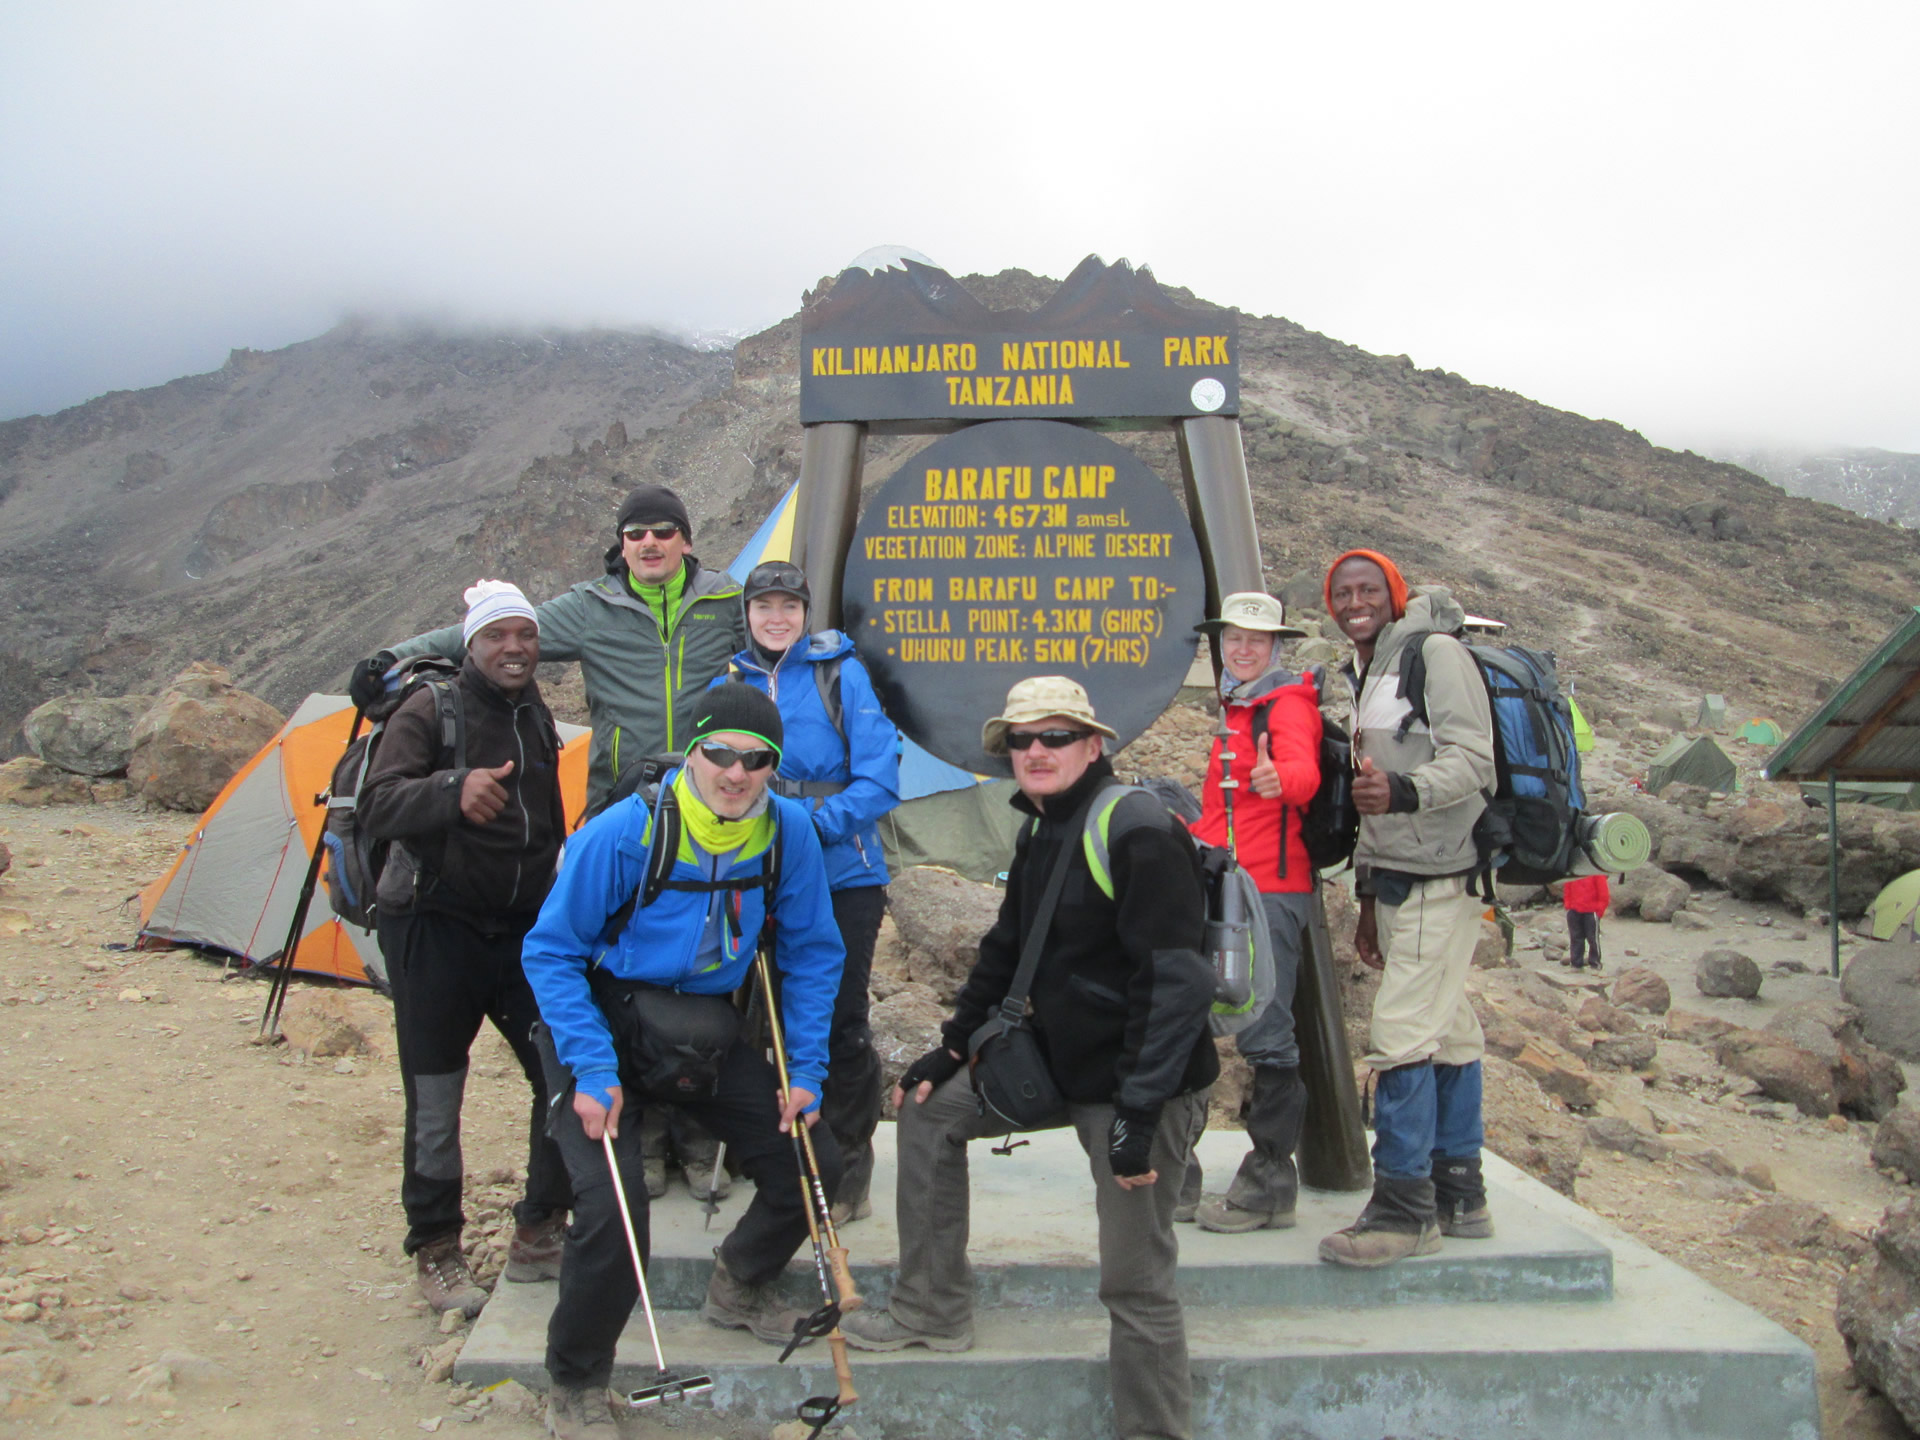 kilimanjaro-climb-6days-marangu-route